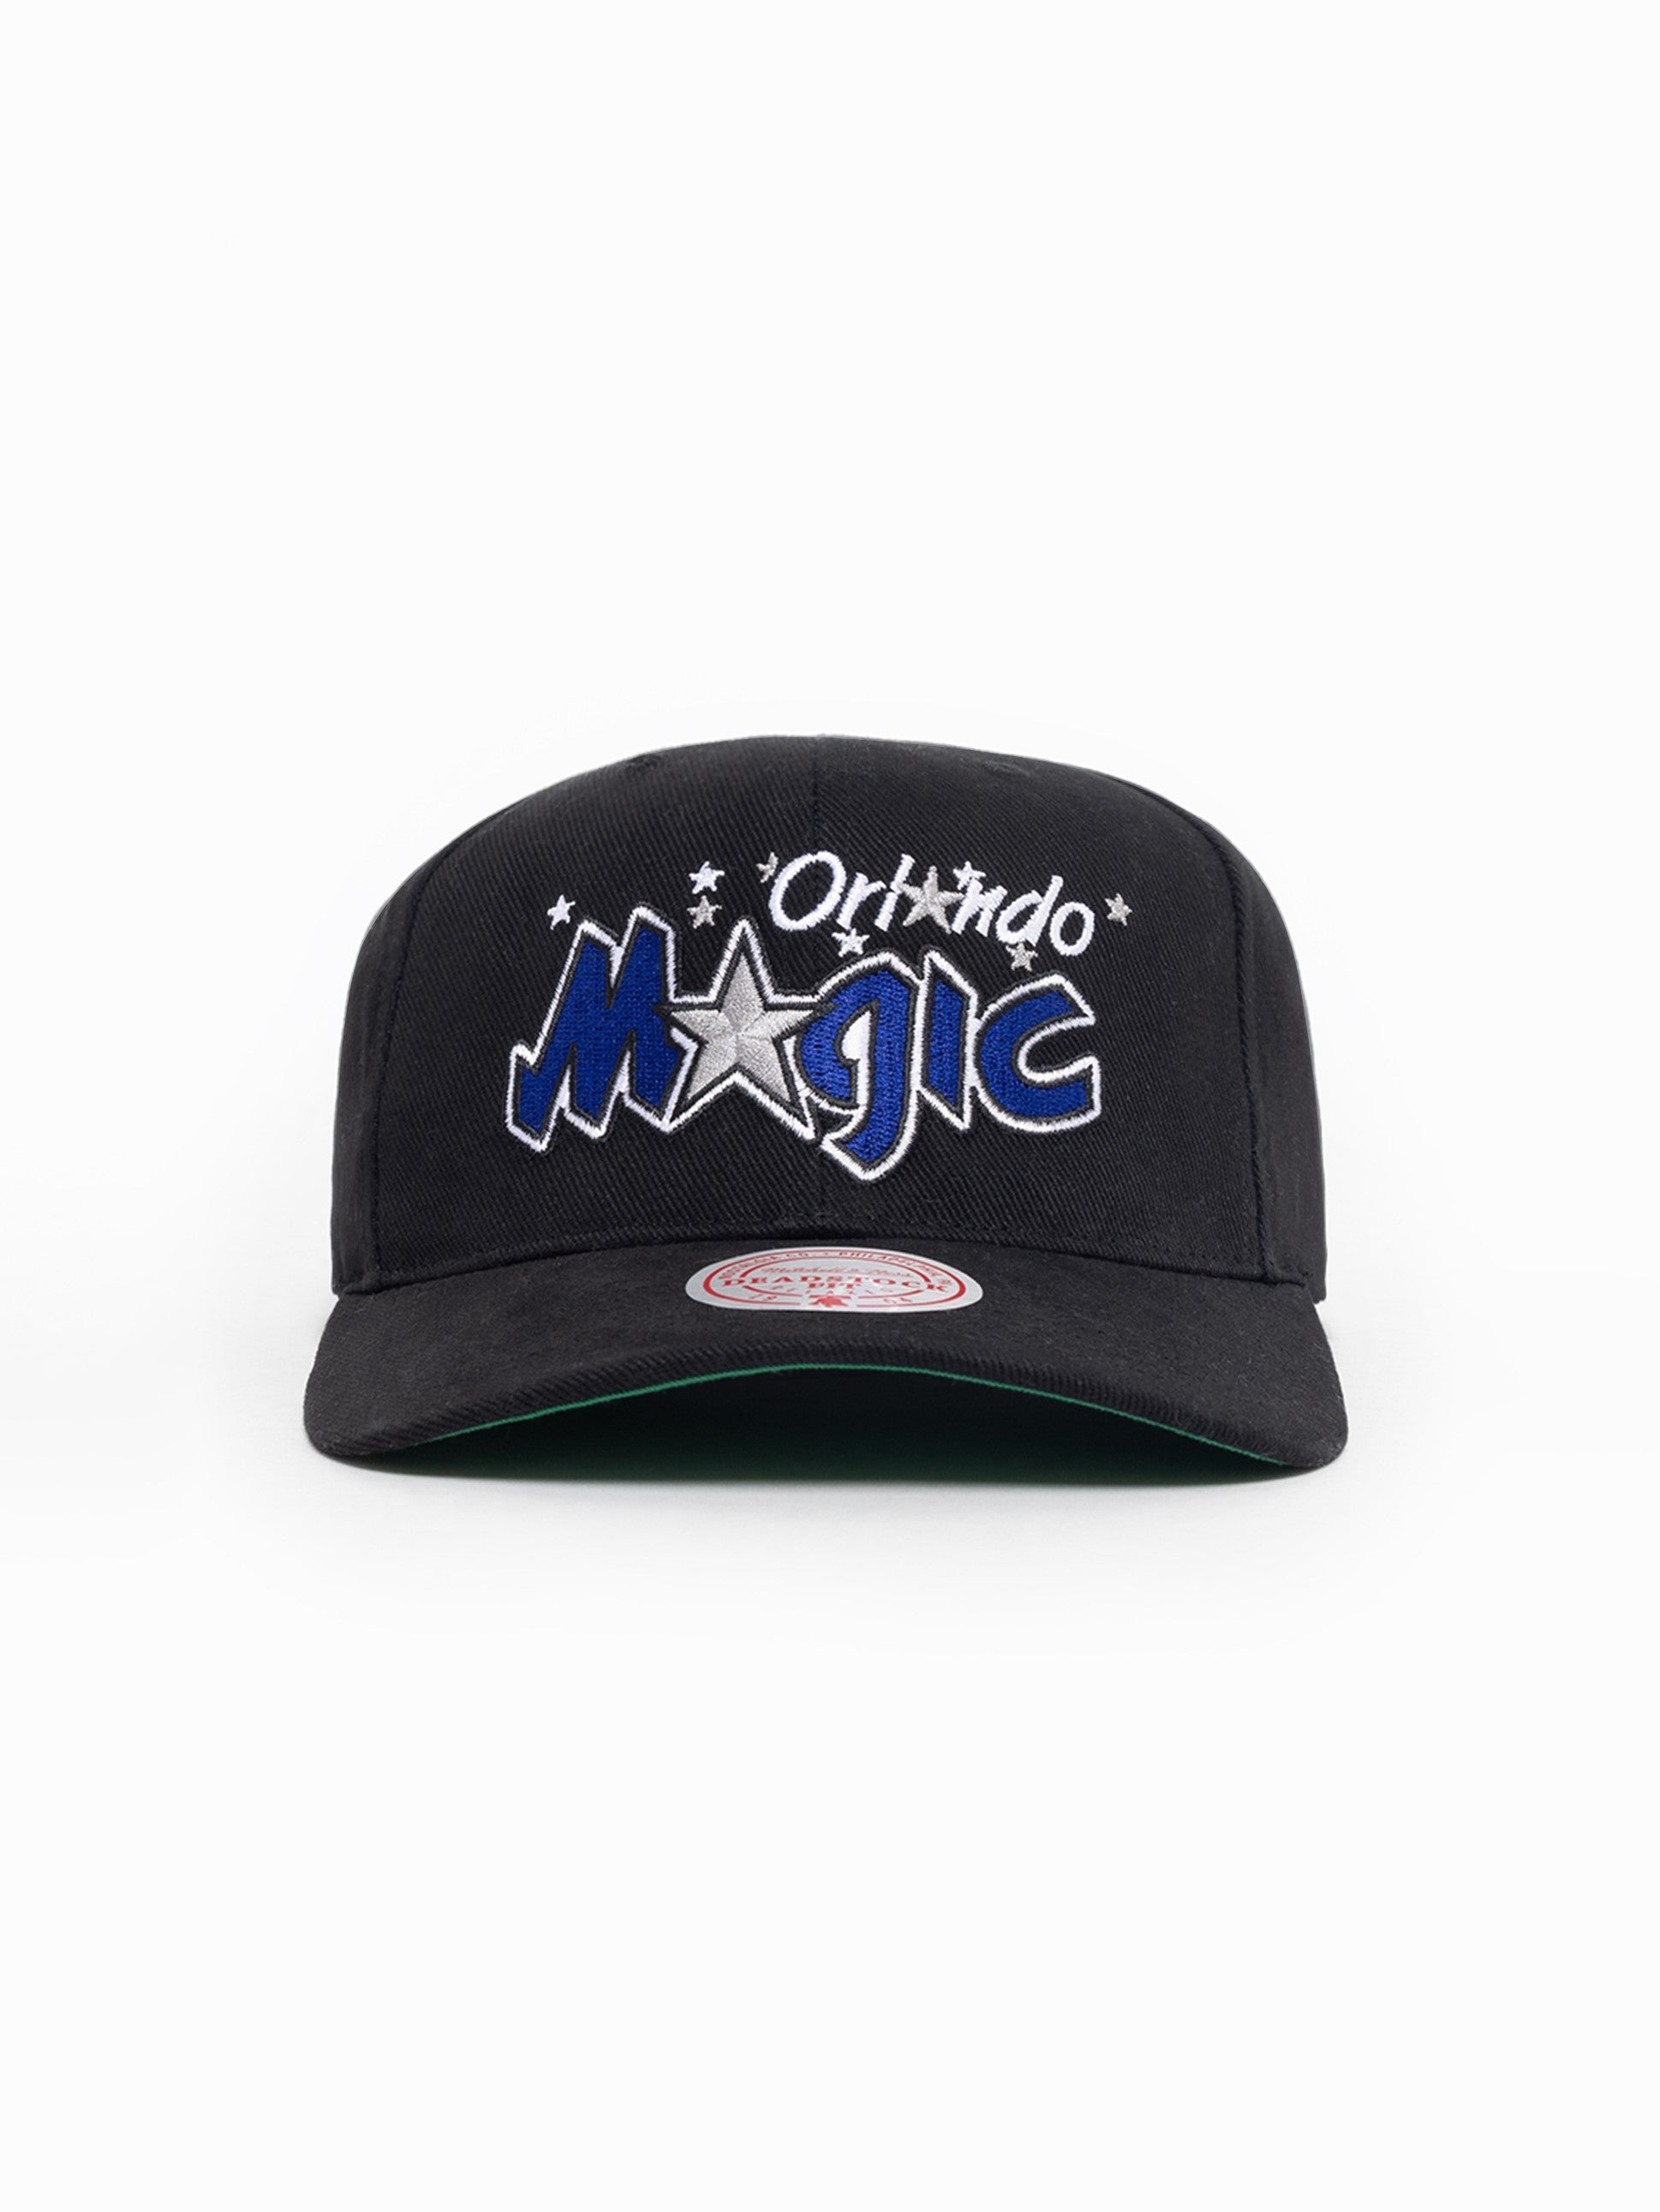 Orlando Magic Hat - Wordmark Black NBA Snapback Cap - Mitchell & Ness